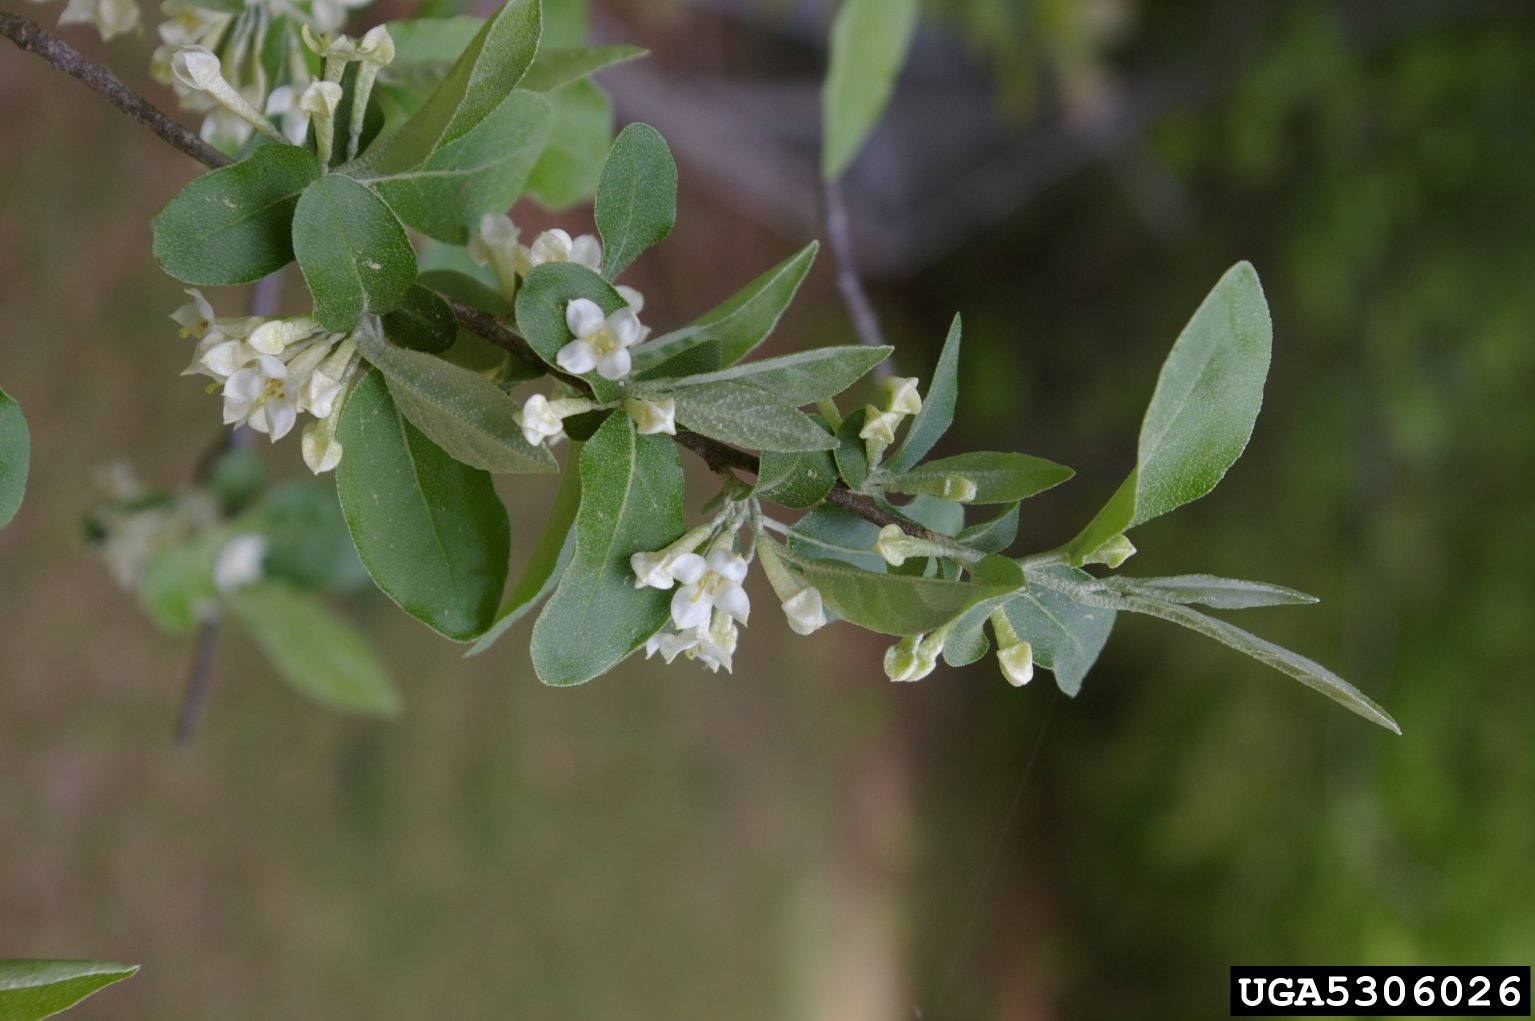 Autumn Olive - Invasive Species & How to Control It